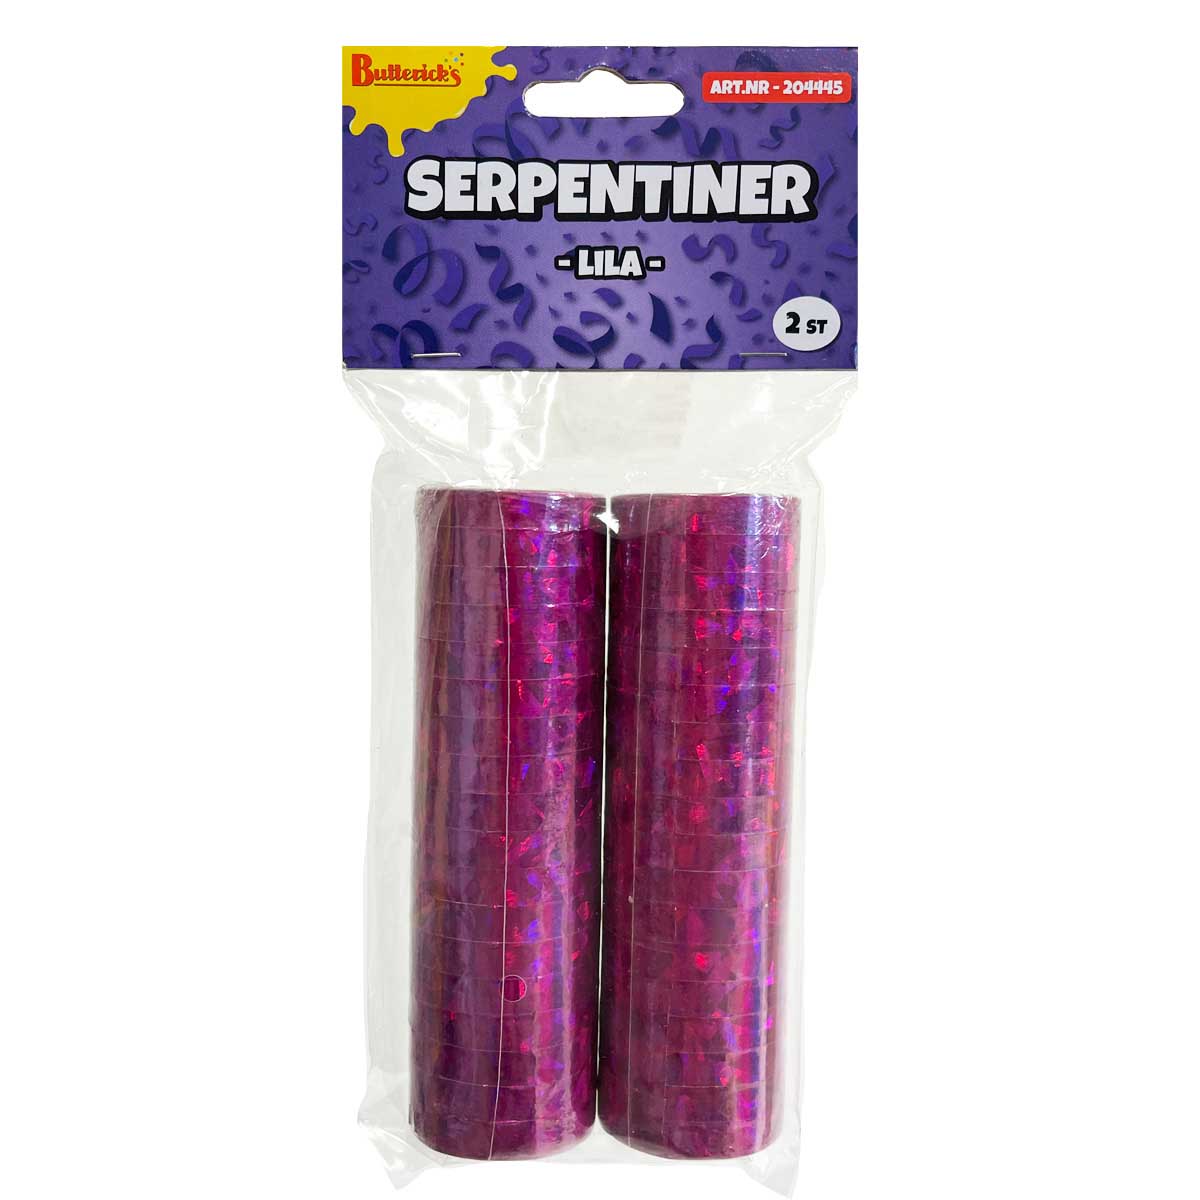 Serpentiner lila 2 st